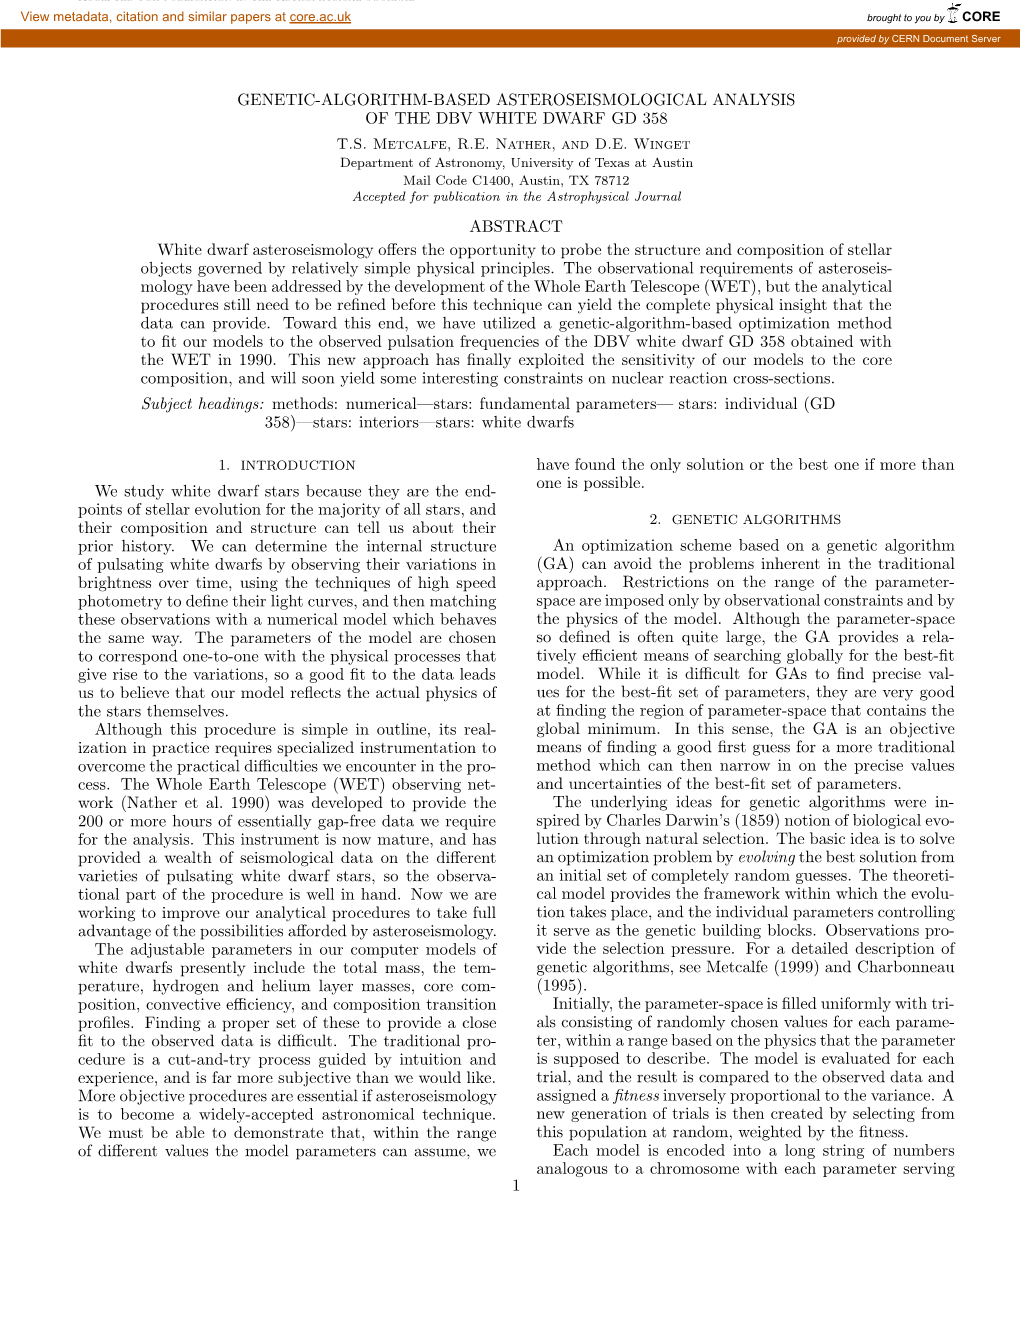 Genetic-Algorithm-Based Asteroseismological Analysis of the Dbv White Dwarf Gd 358 T.S